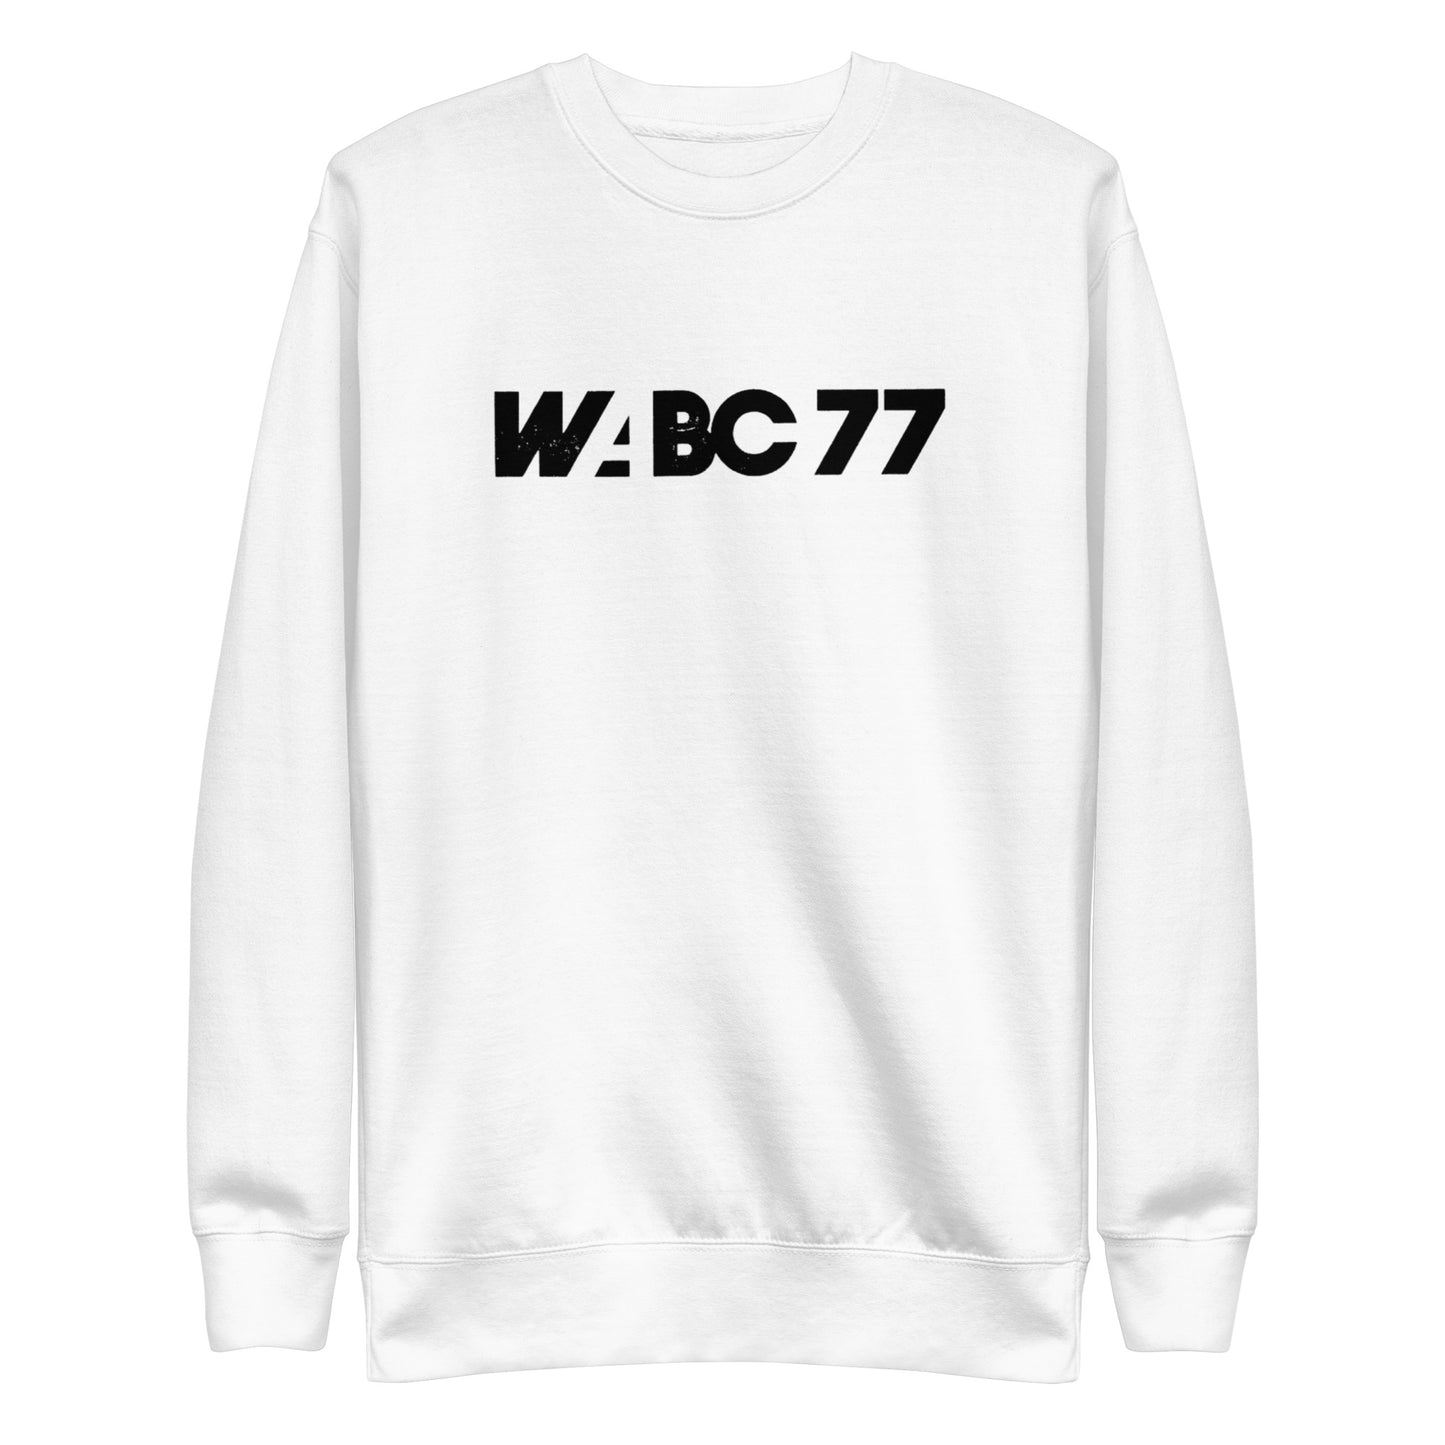 Classic 77 WABC Premium Sweatshirt